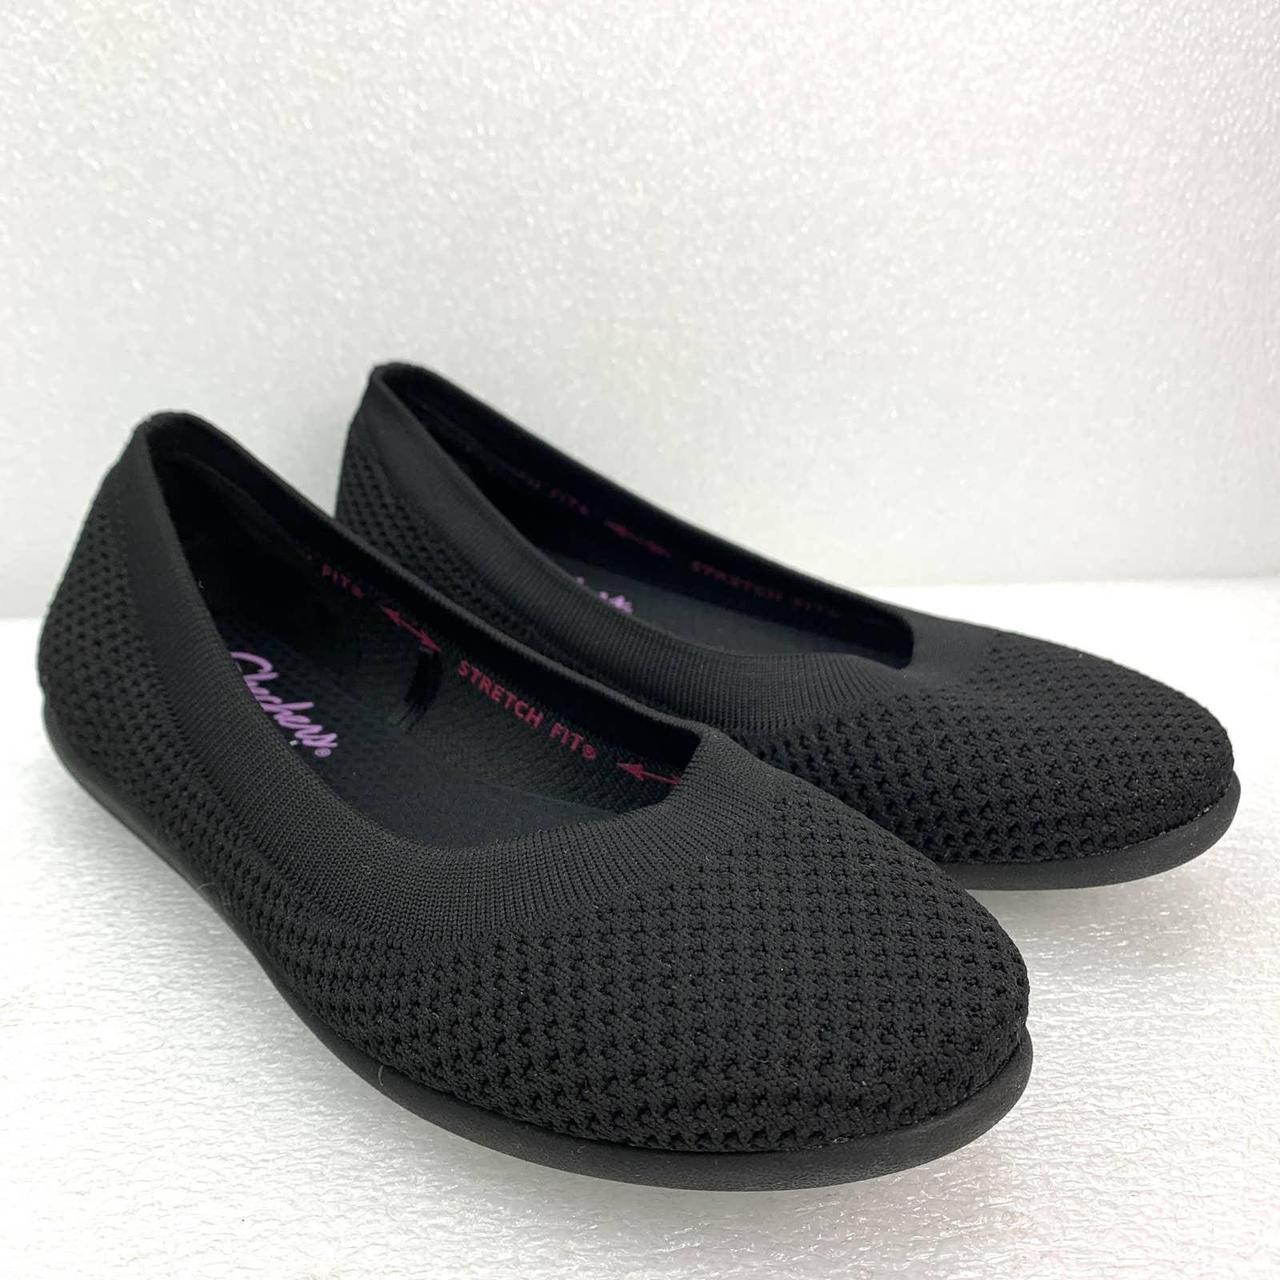 SKECHERS Cleo Sport Flat Shoes in Solid Black Size... - Depop